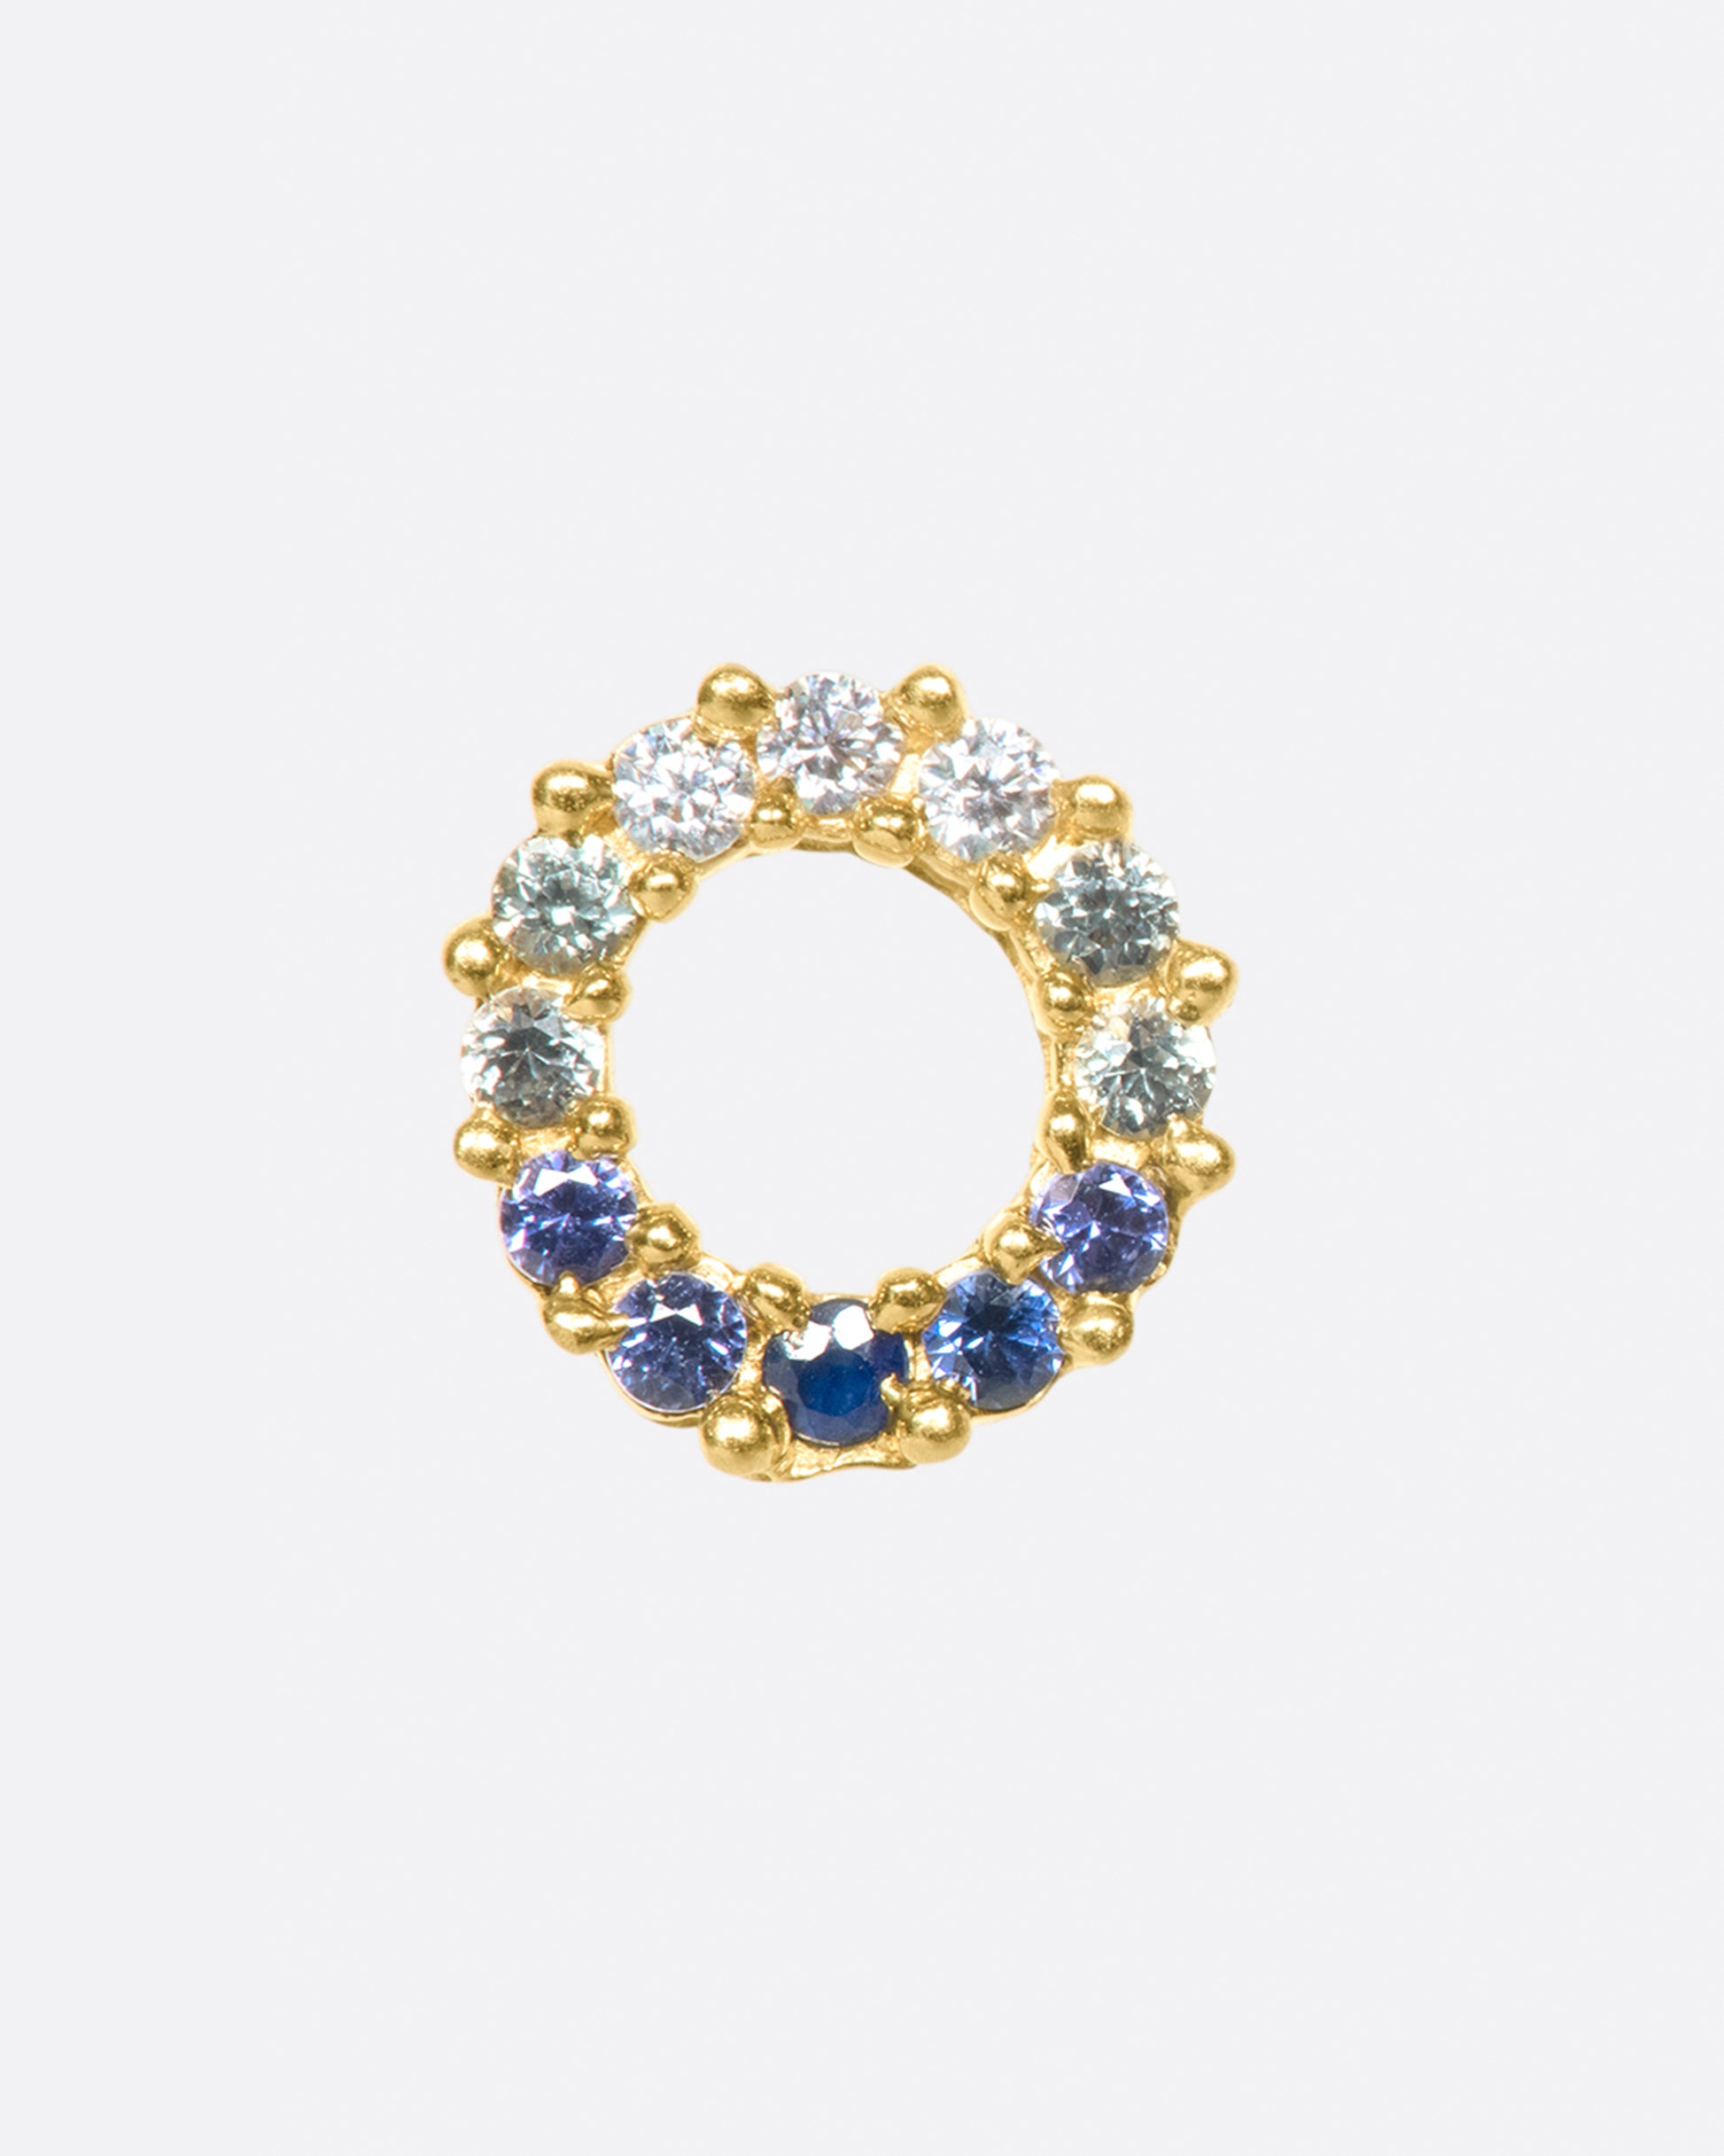 A sparkly wreath of ombré blue sapphires.